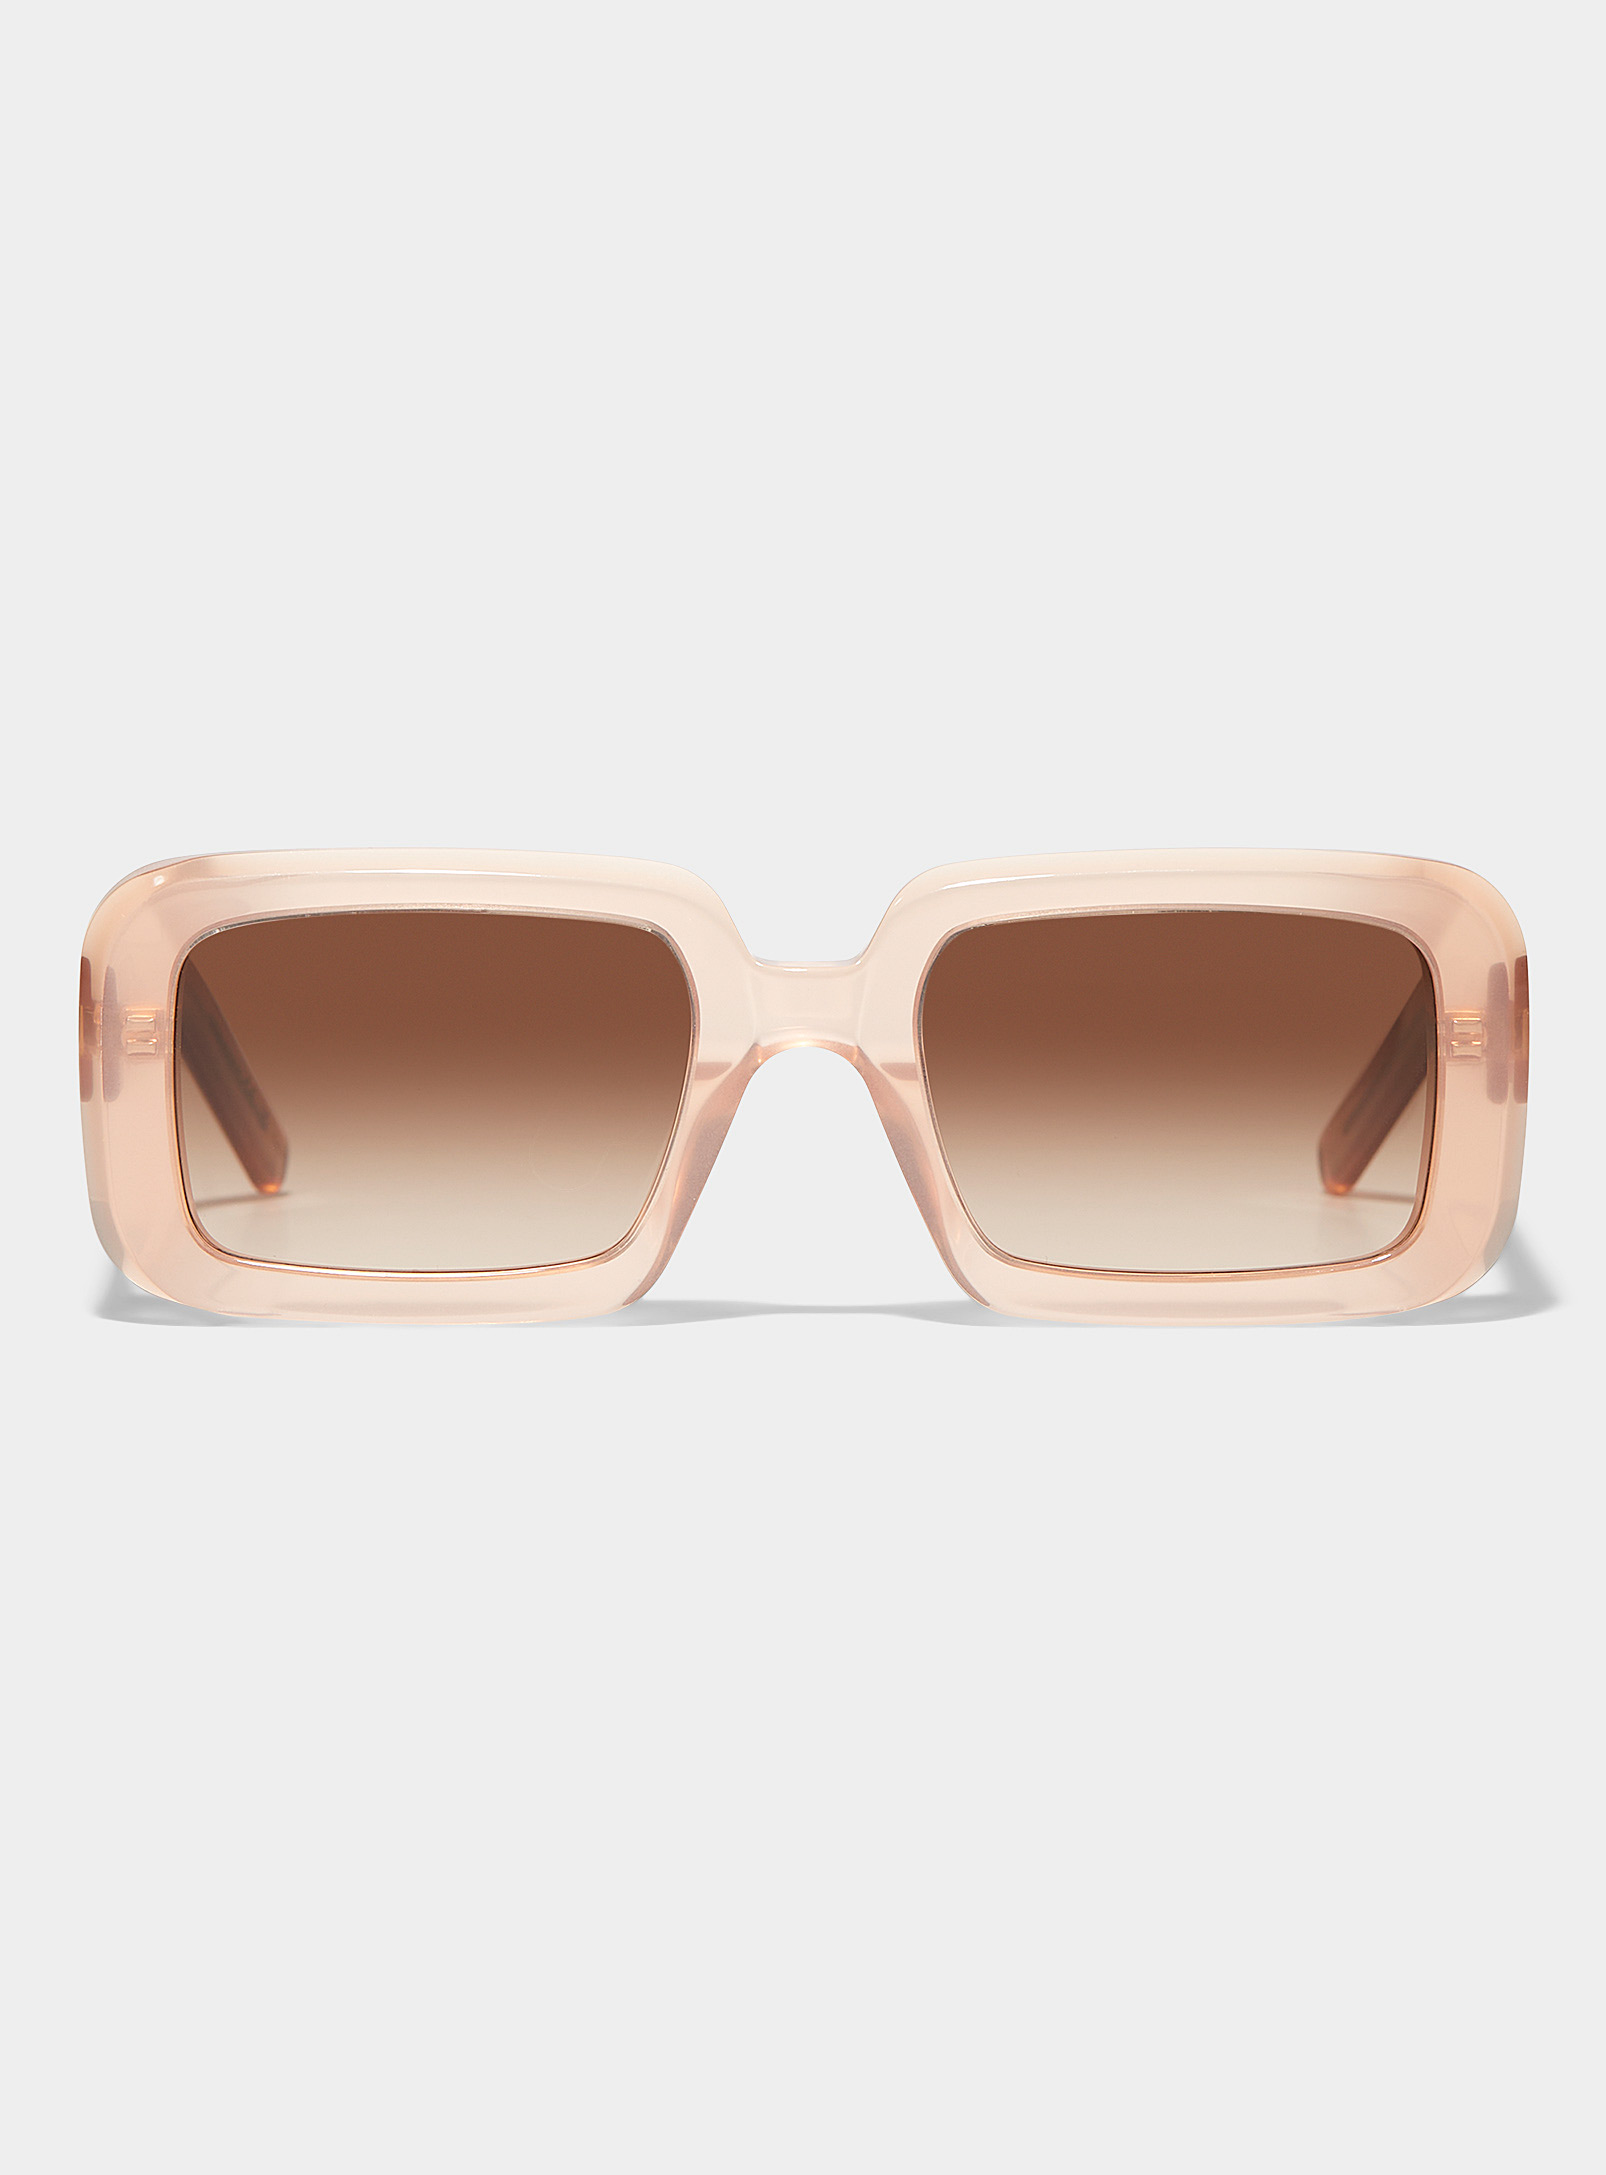 Saint Laurent - Women's Sunrise rectangular sunglasses